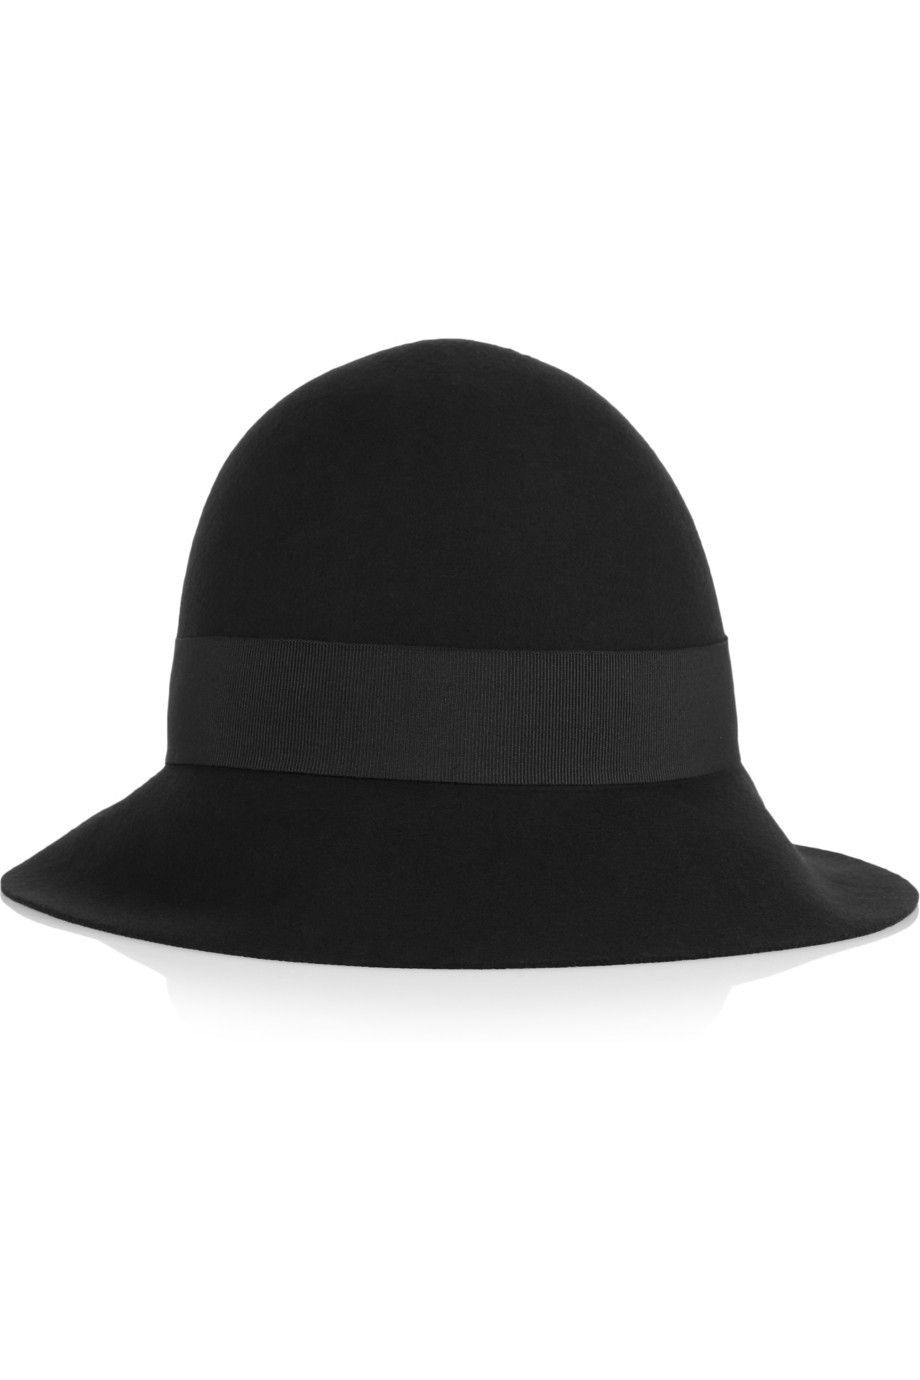 Hat, Fashion accessory, Style, Line, Headgear, Costume accessory, Black, Maroon, Costume hat, Beige, 